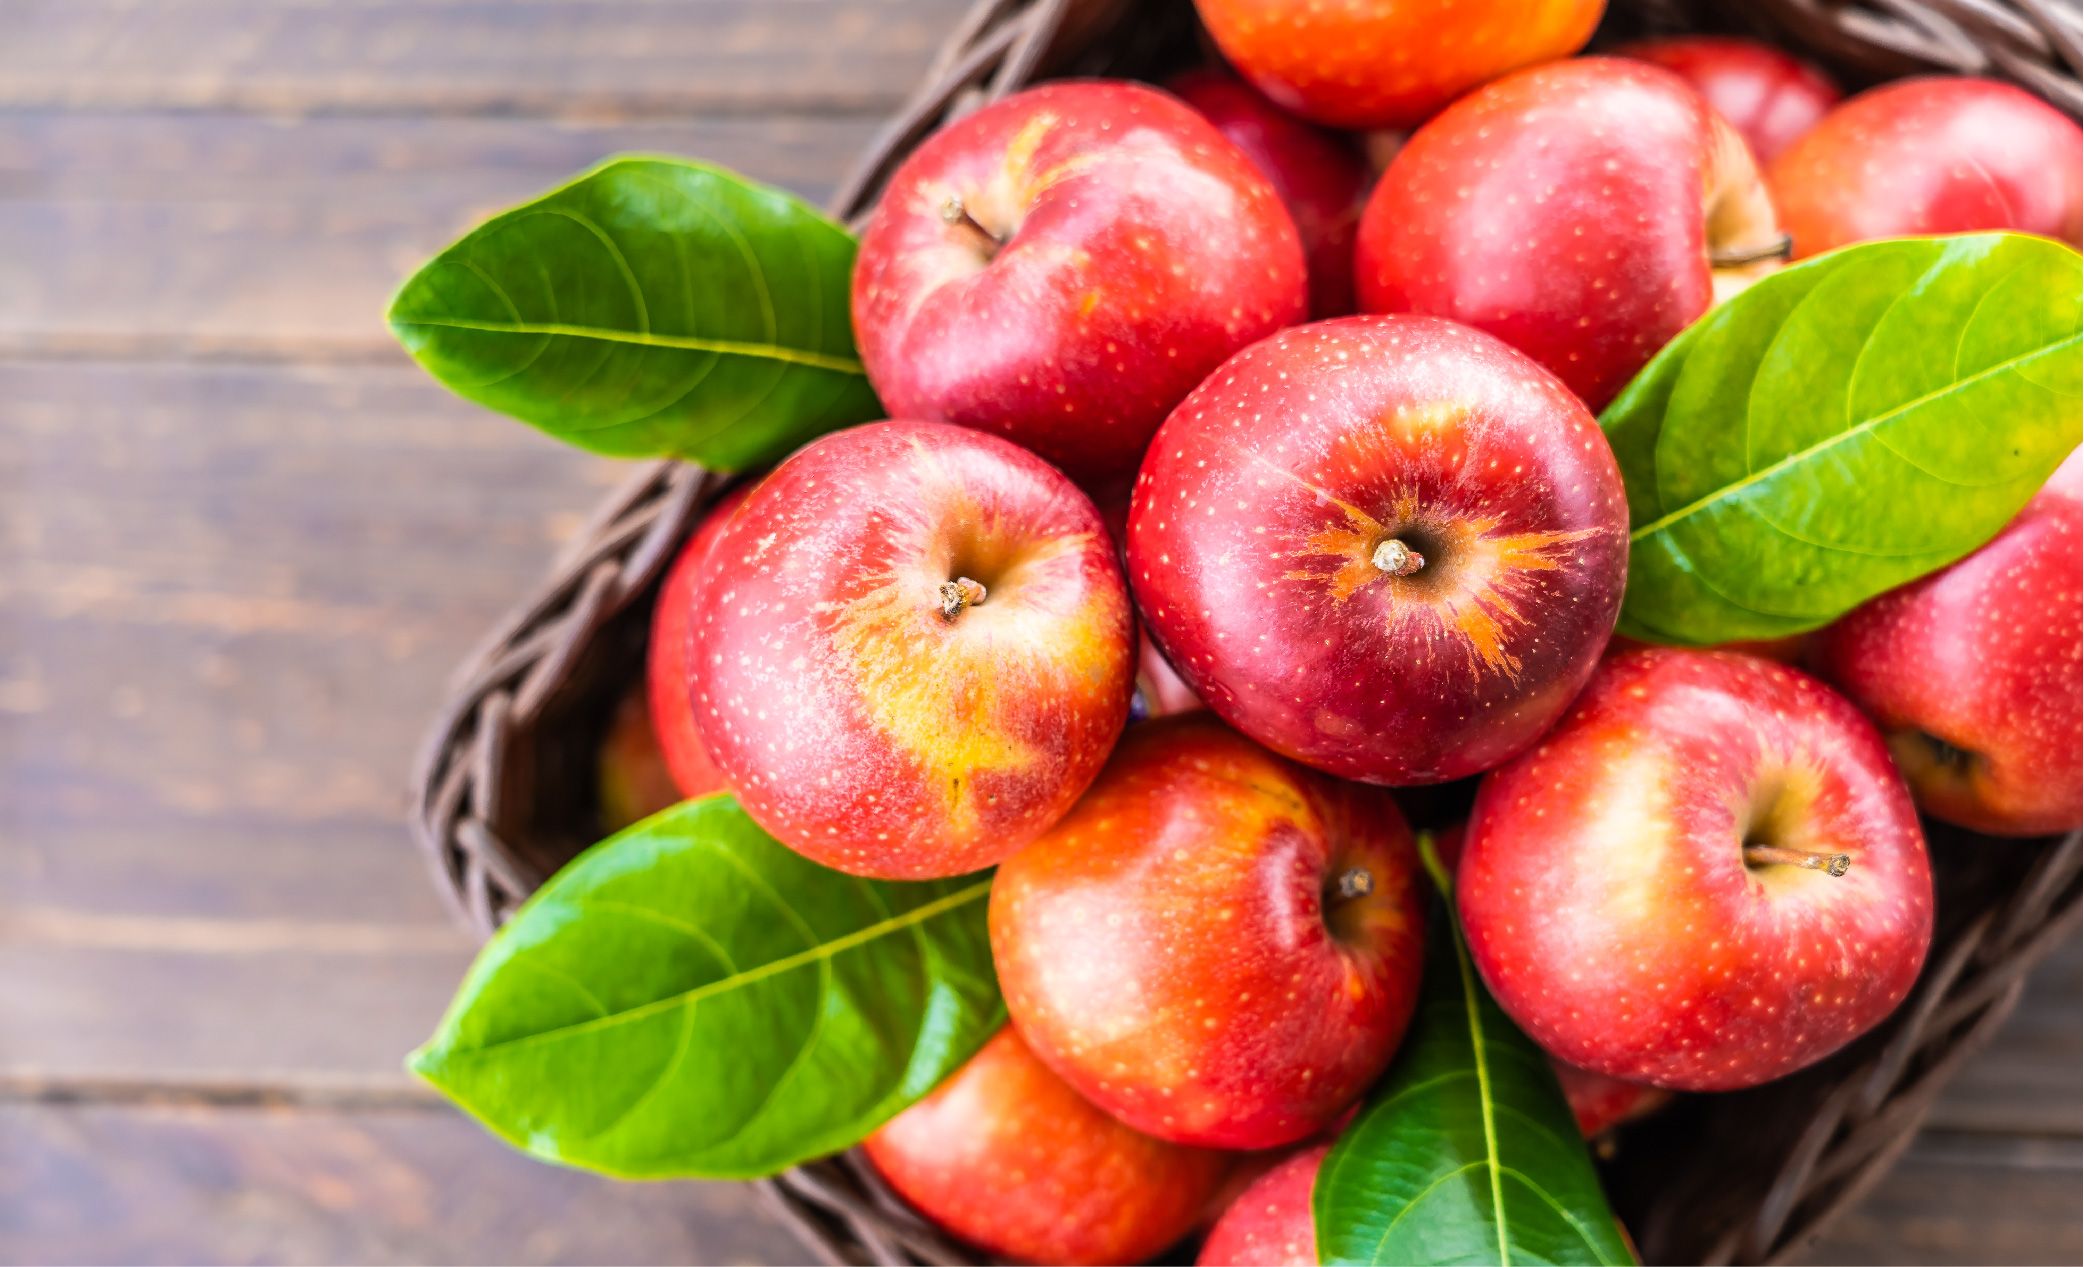 apples - soluble fiber foods